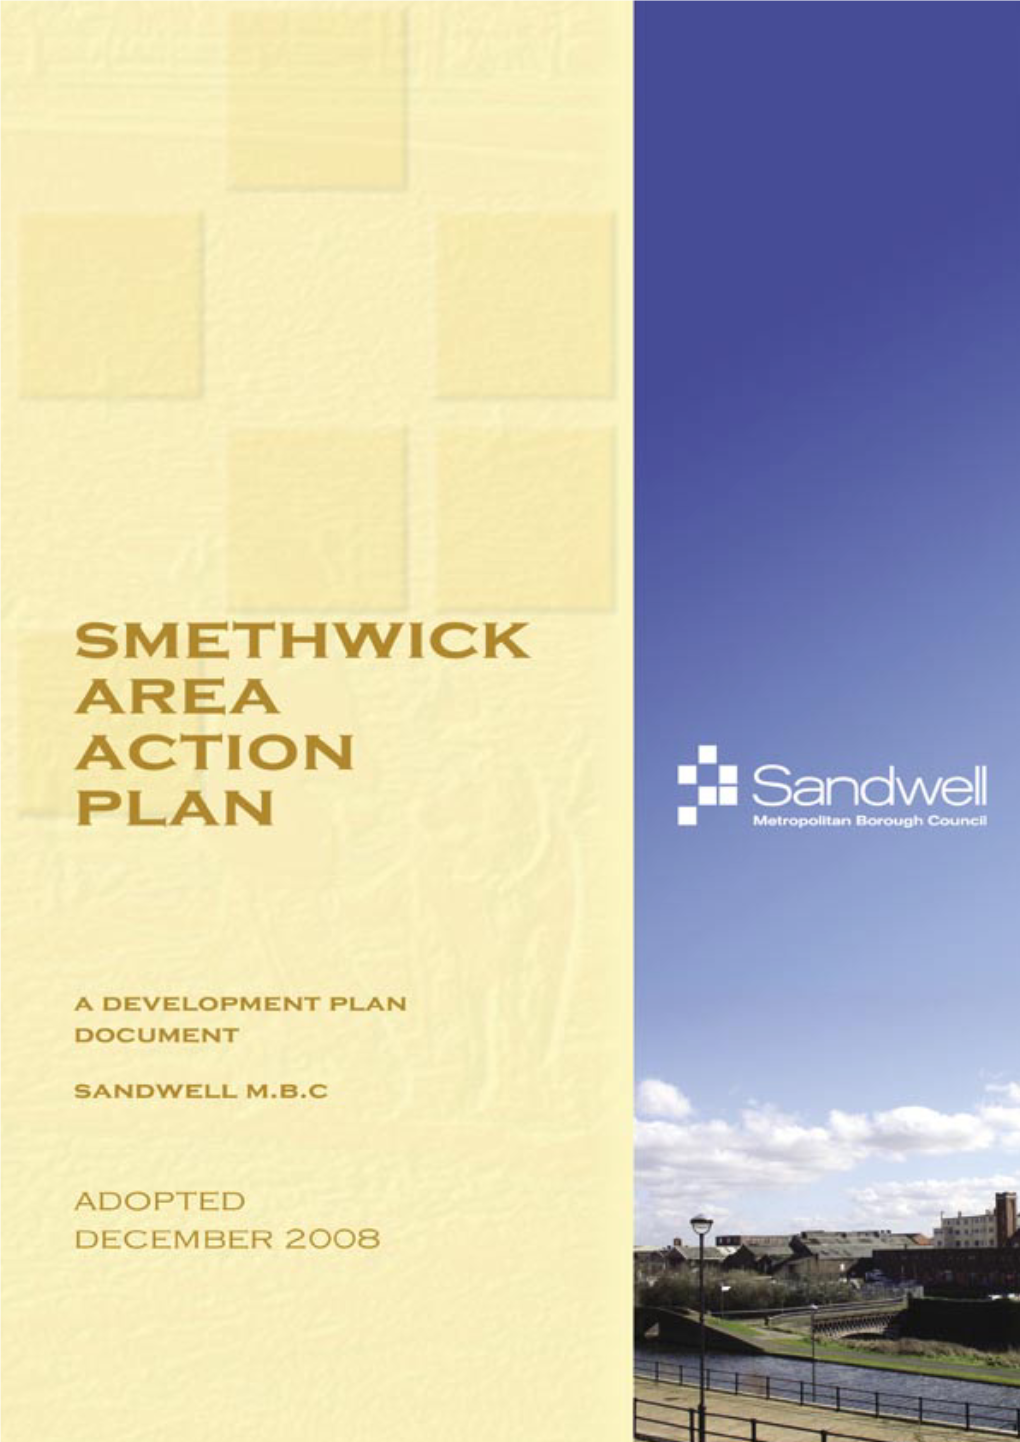 The Smethwick Area Action Plan